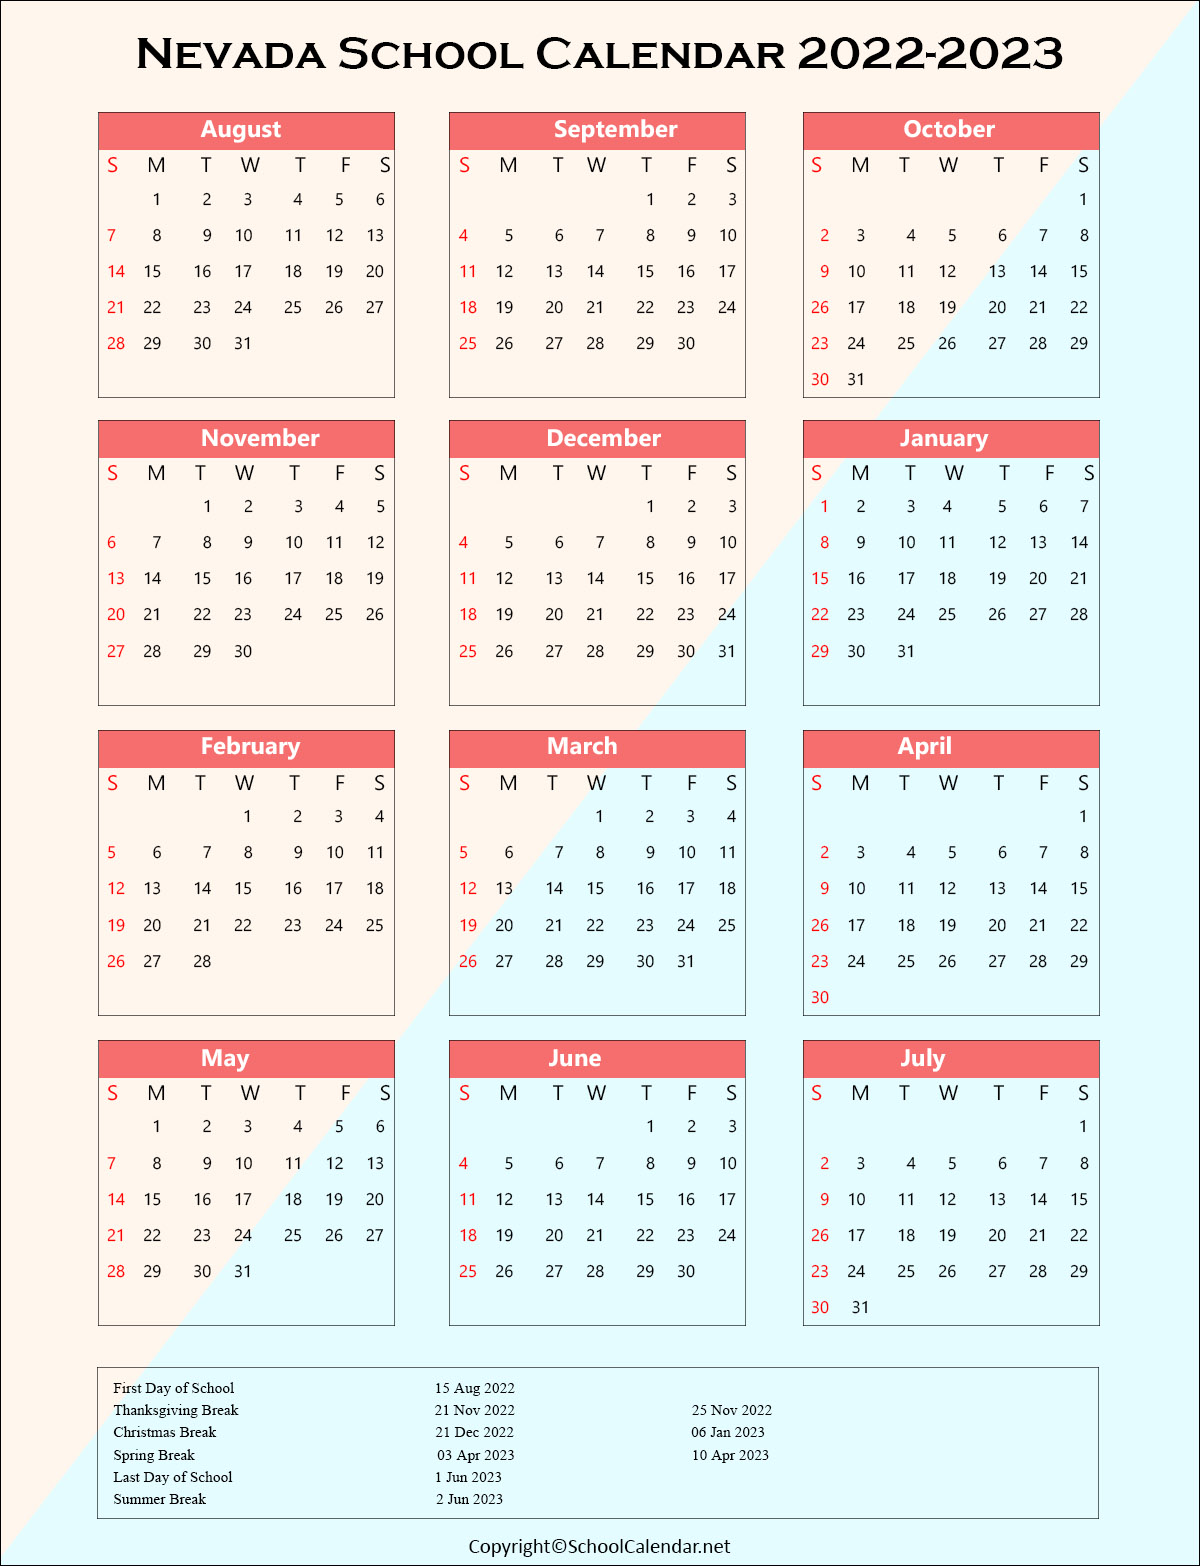 Nevada School Holiday Calendar 2022